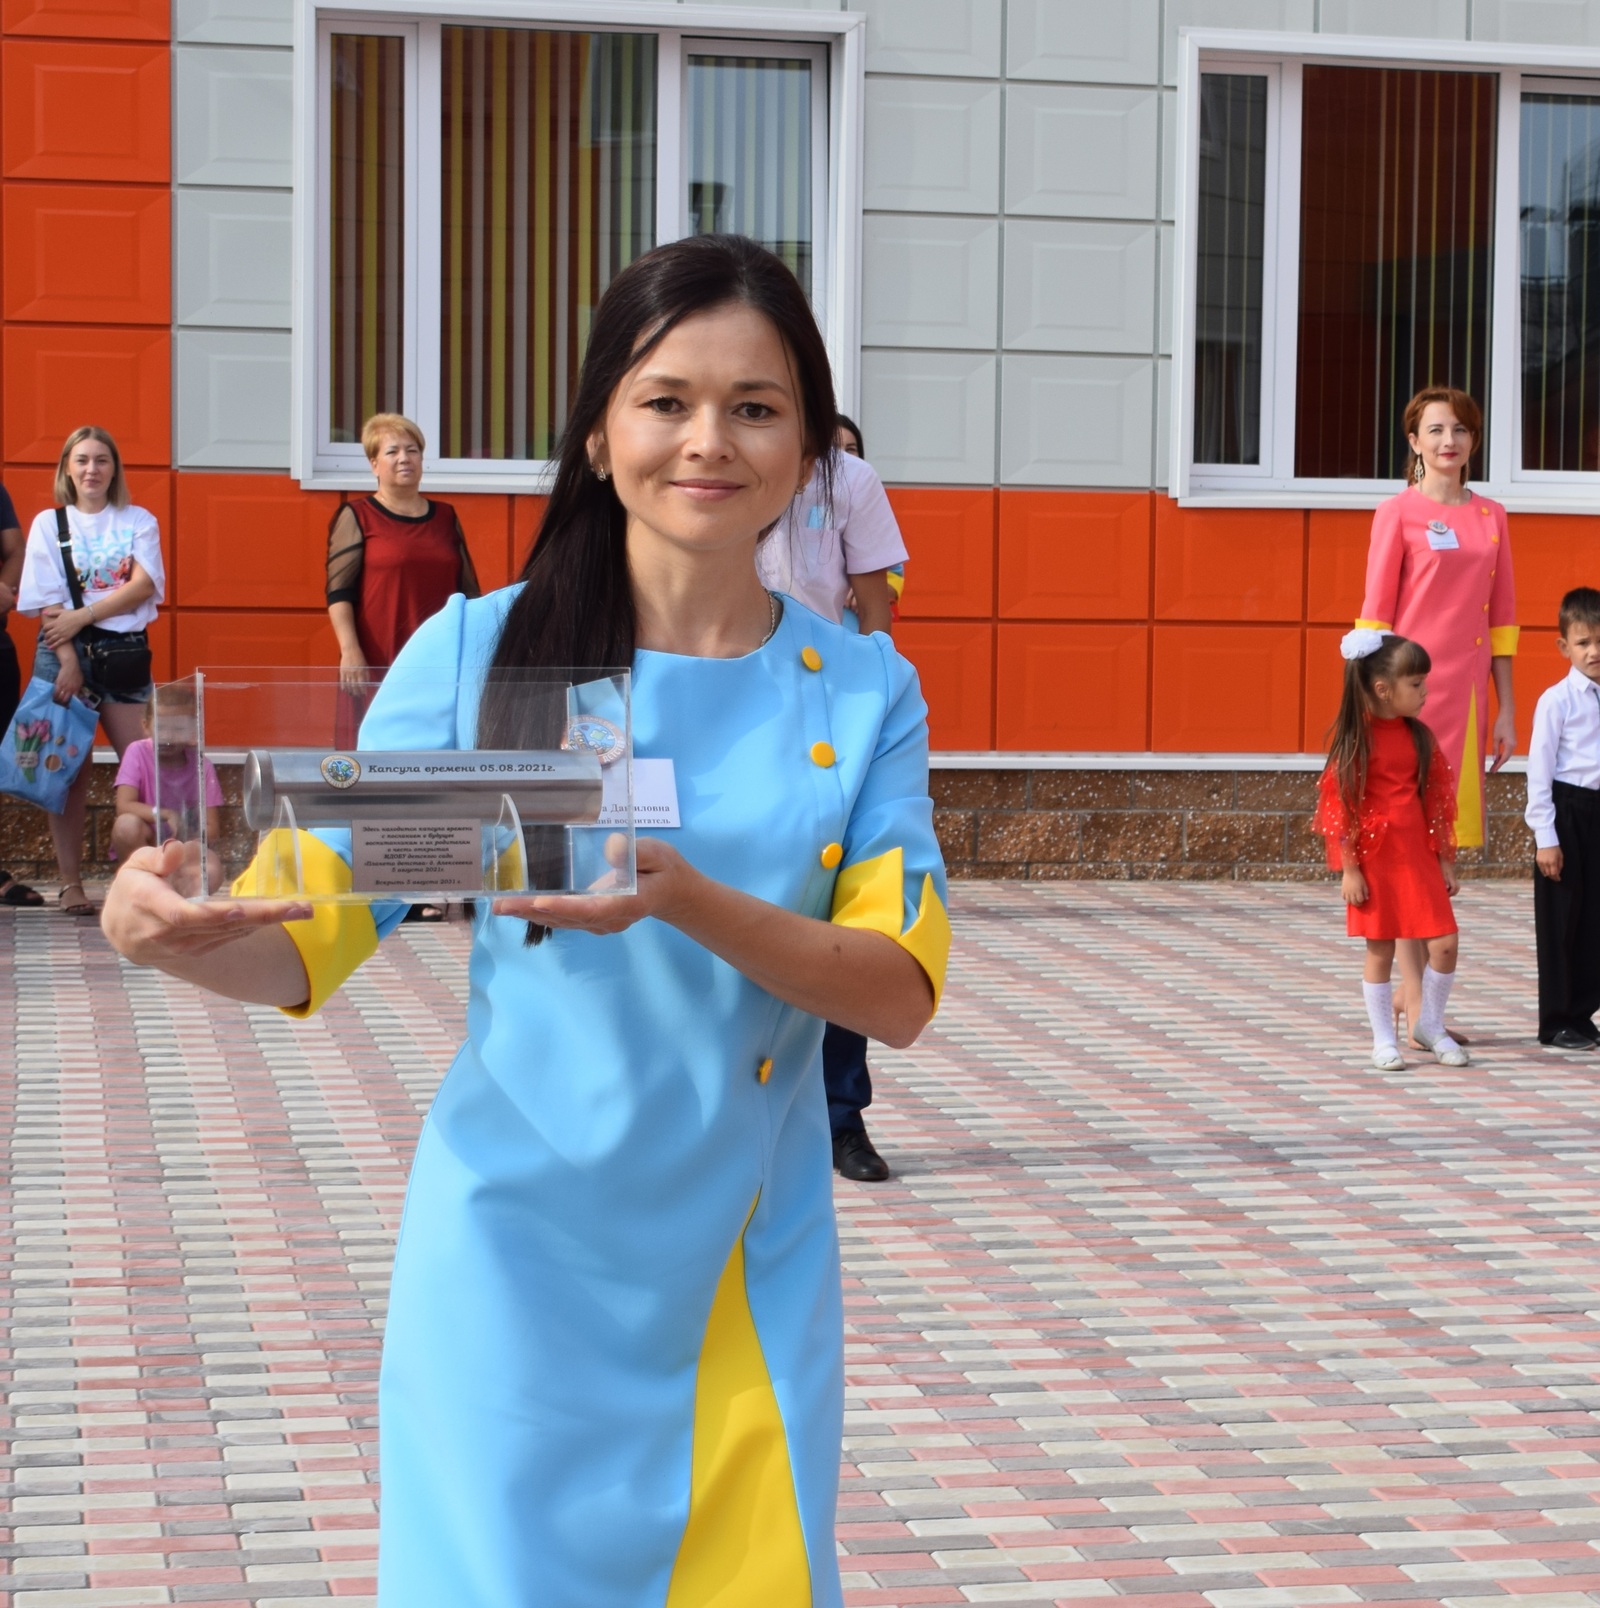 Детский сад Уфимского района Башкирии заложил капсулу времени